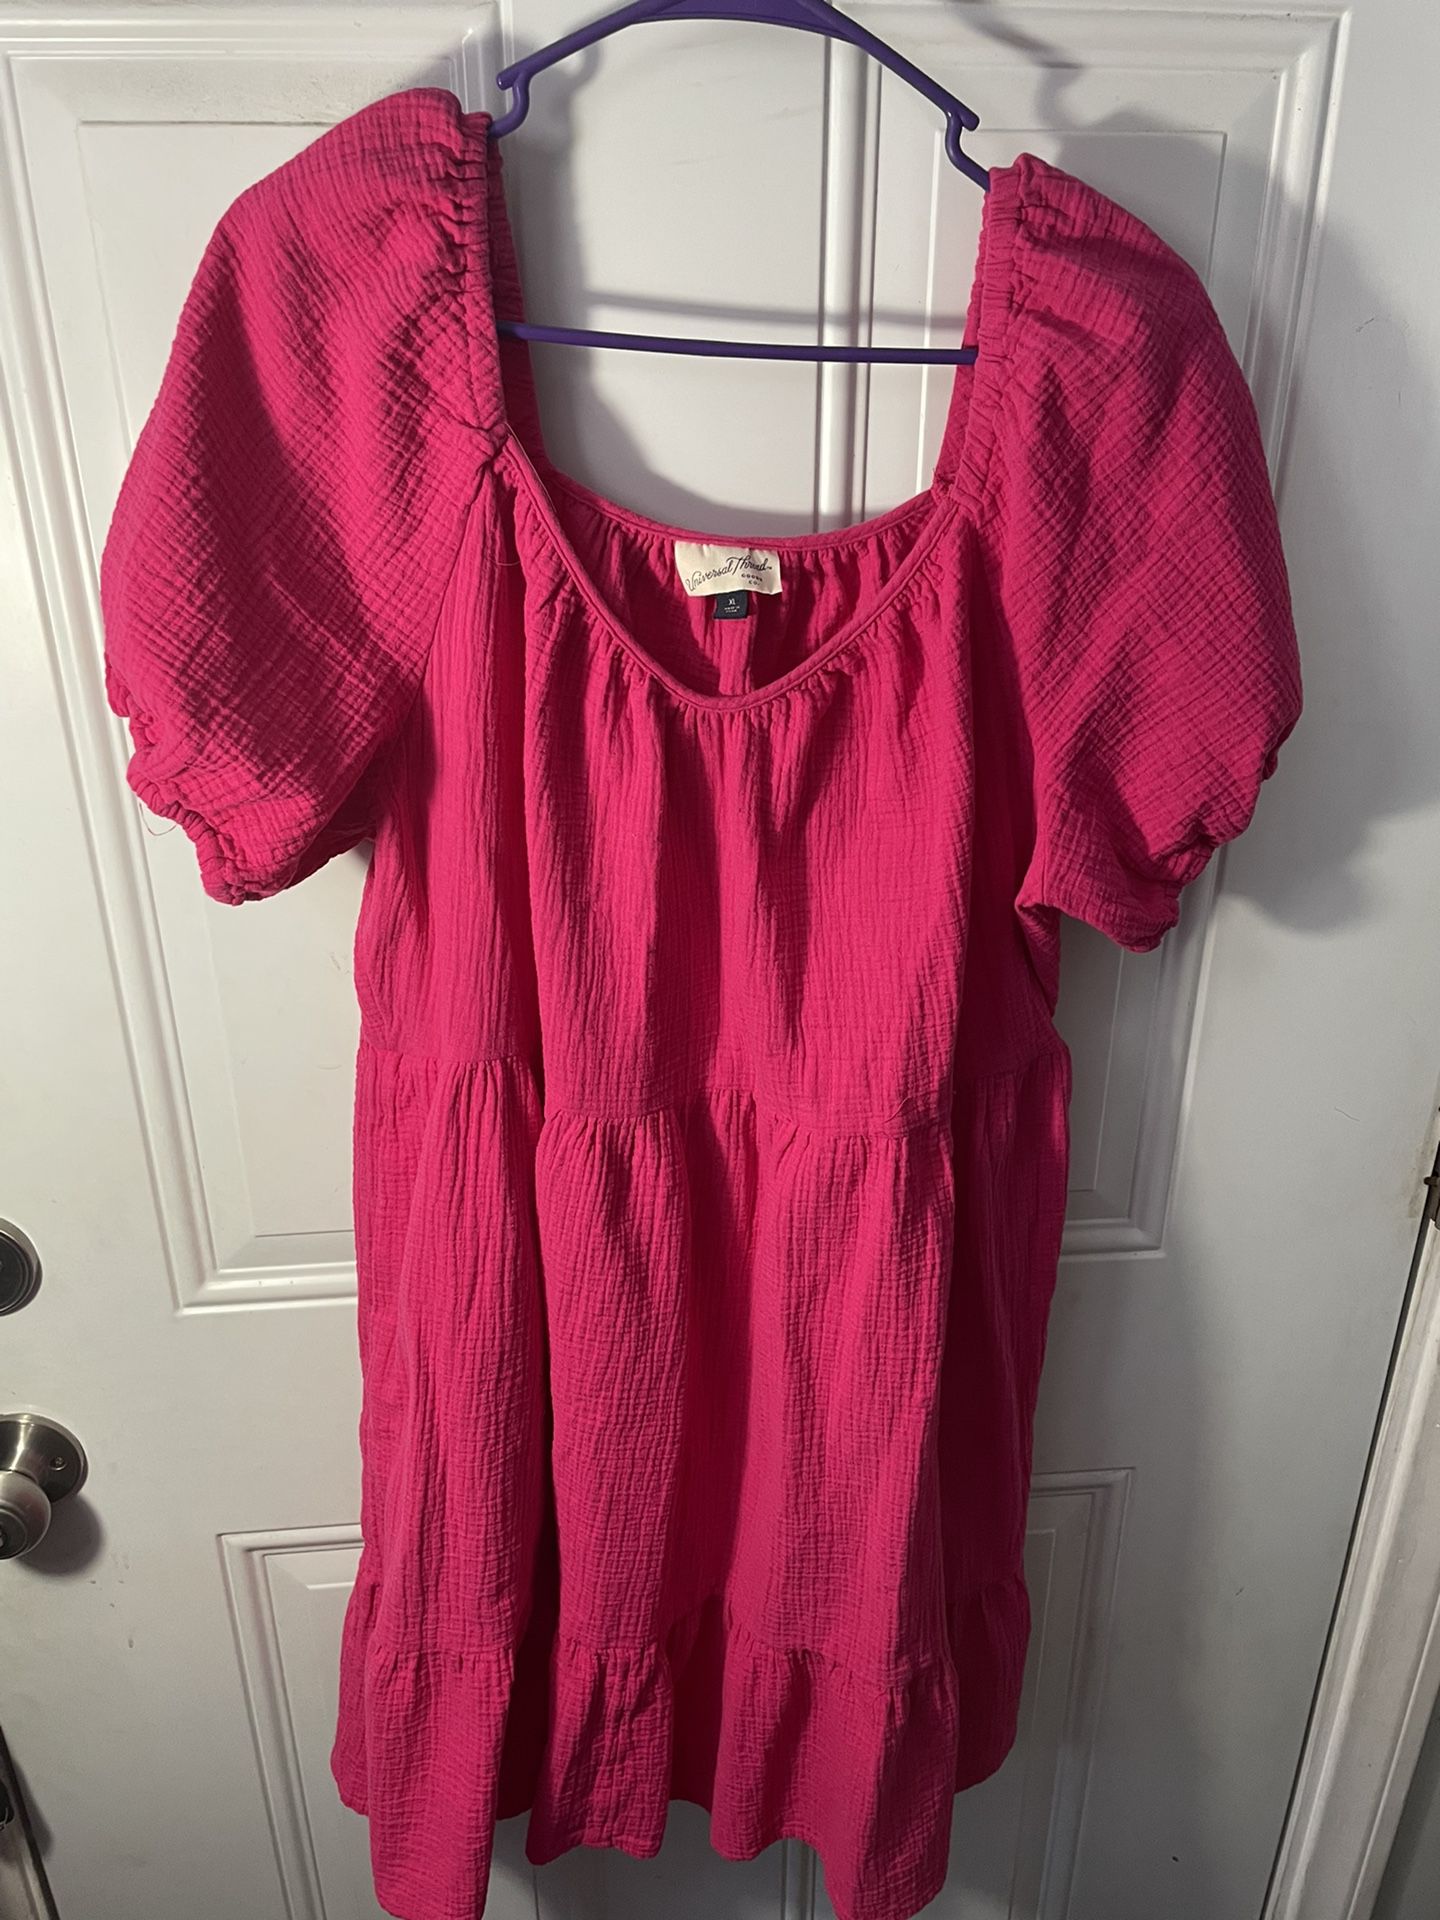 Hot Pink xL Dress From Target